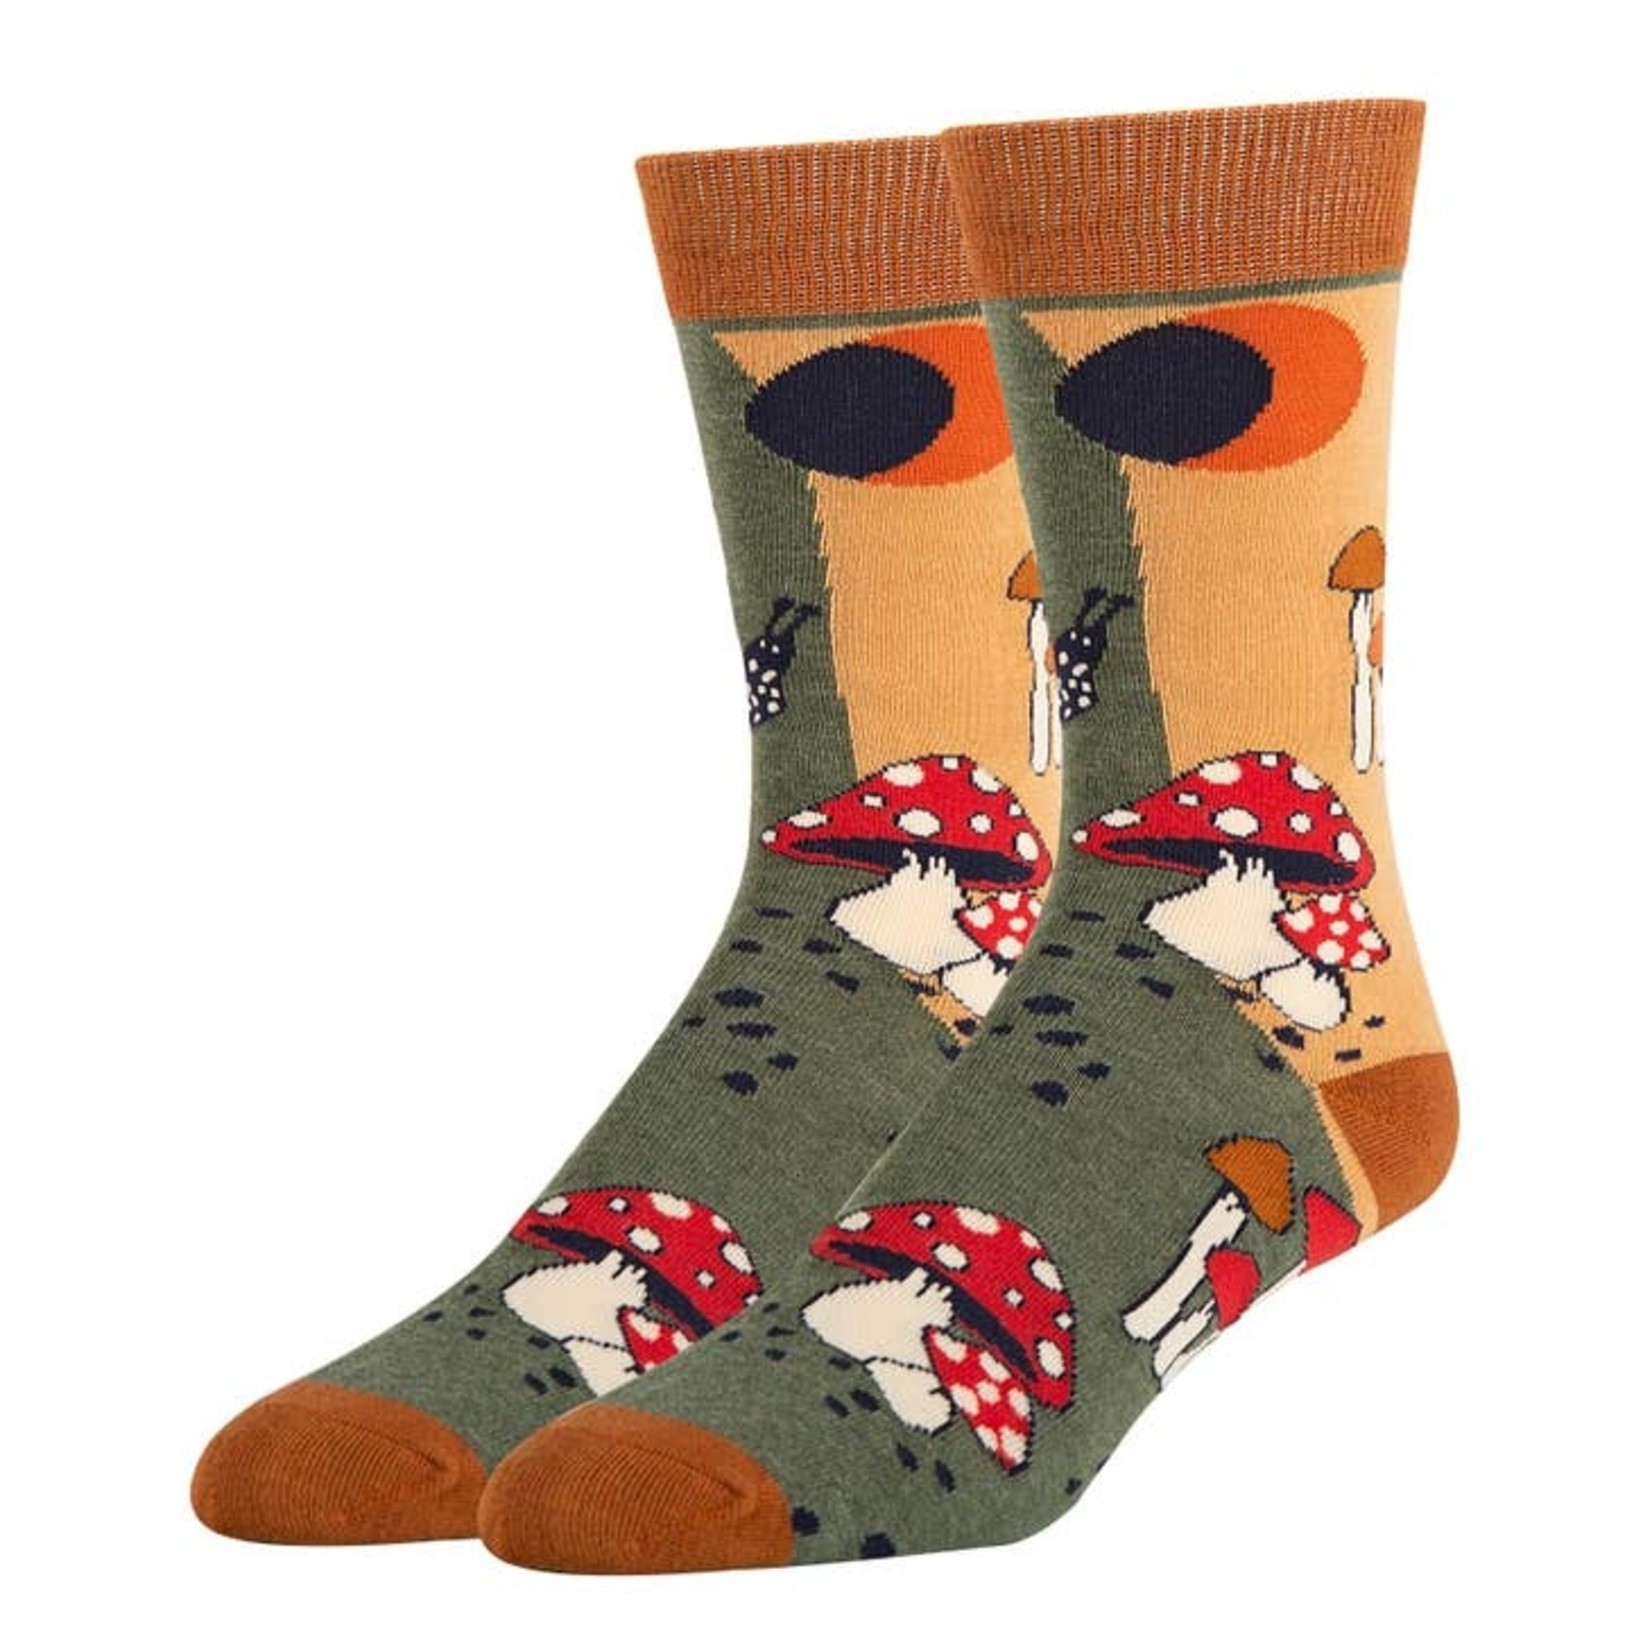 Hongo Delight Men's Socks